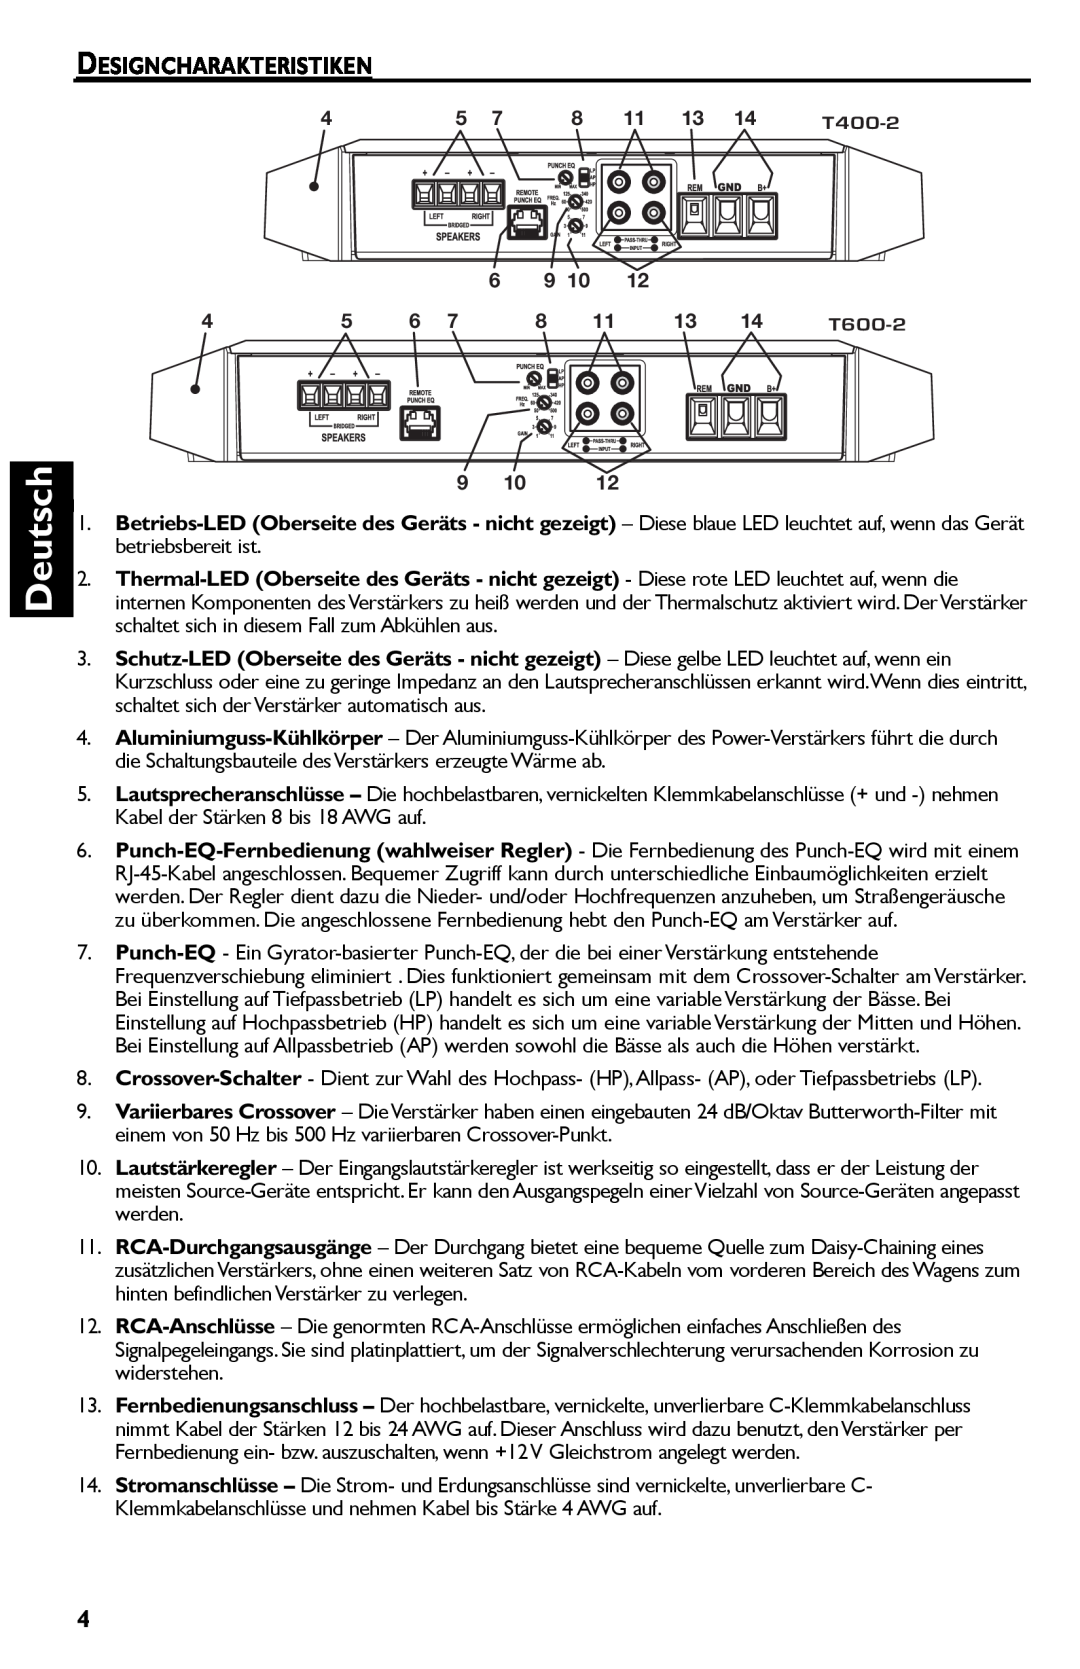 Rockford Fosgate T600-2 manual Deutsch, Designcharakteristiken, T400-2 